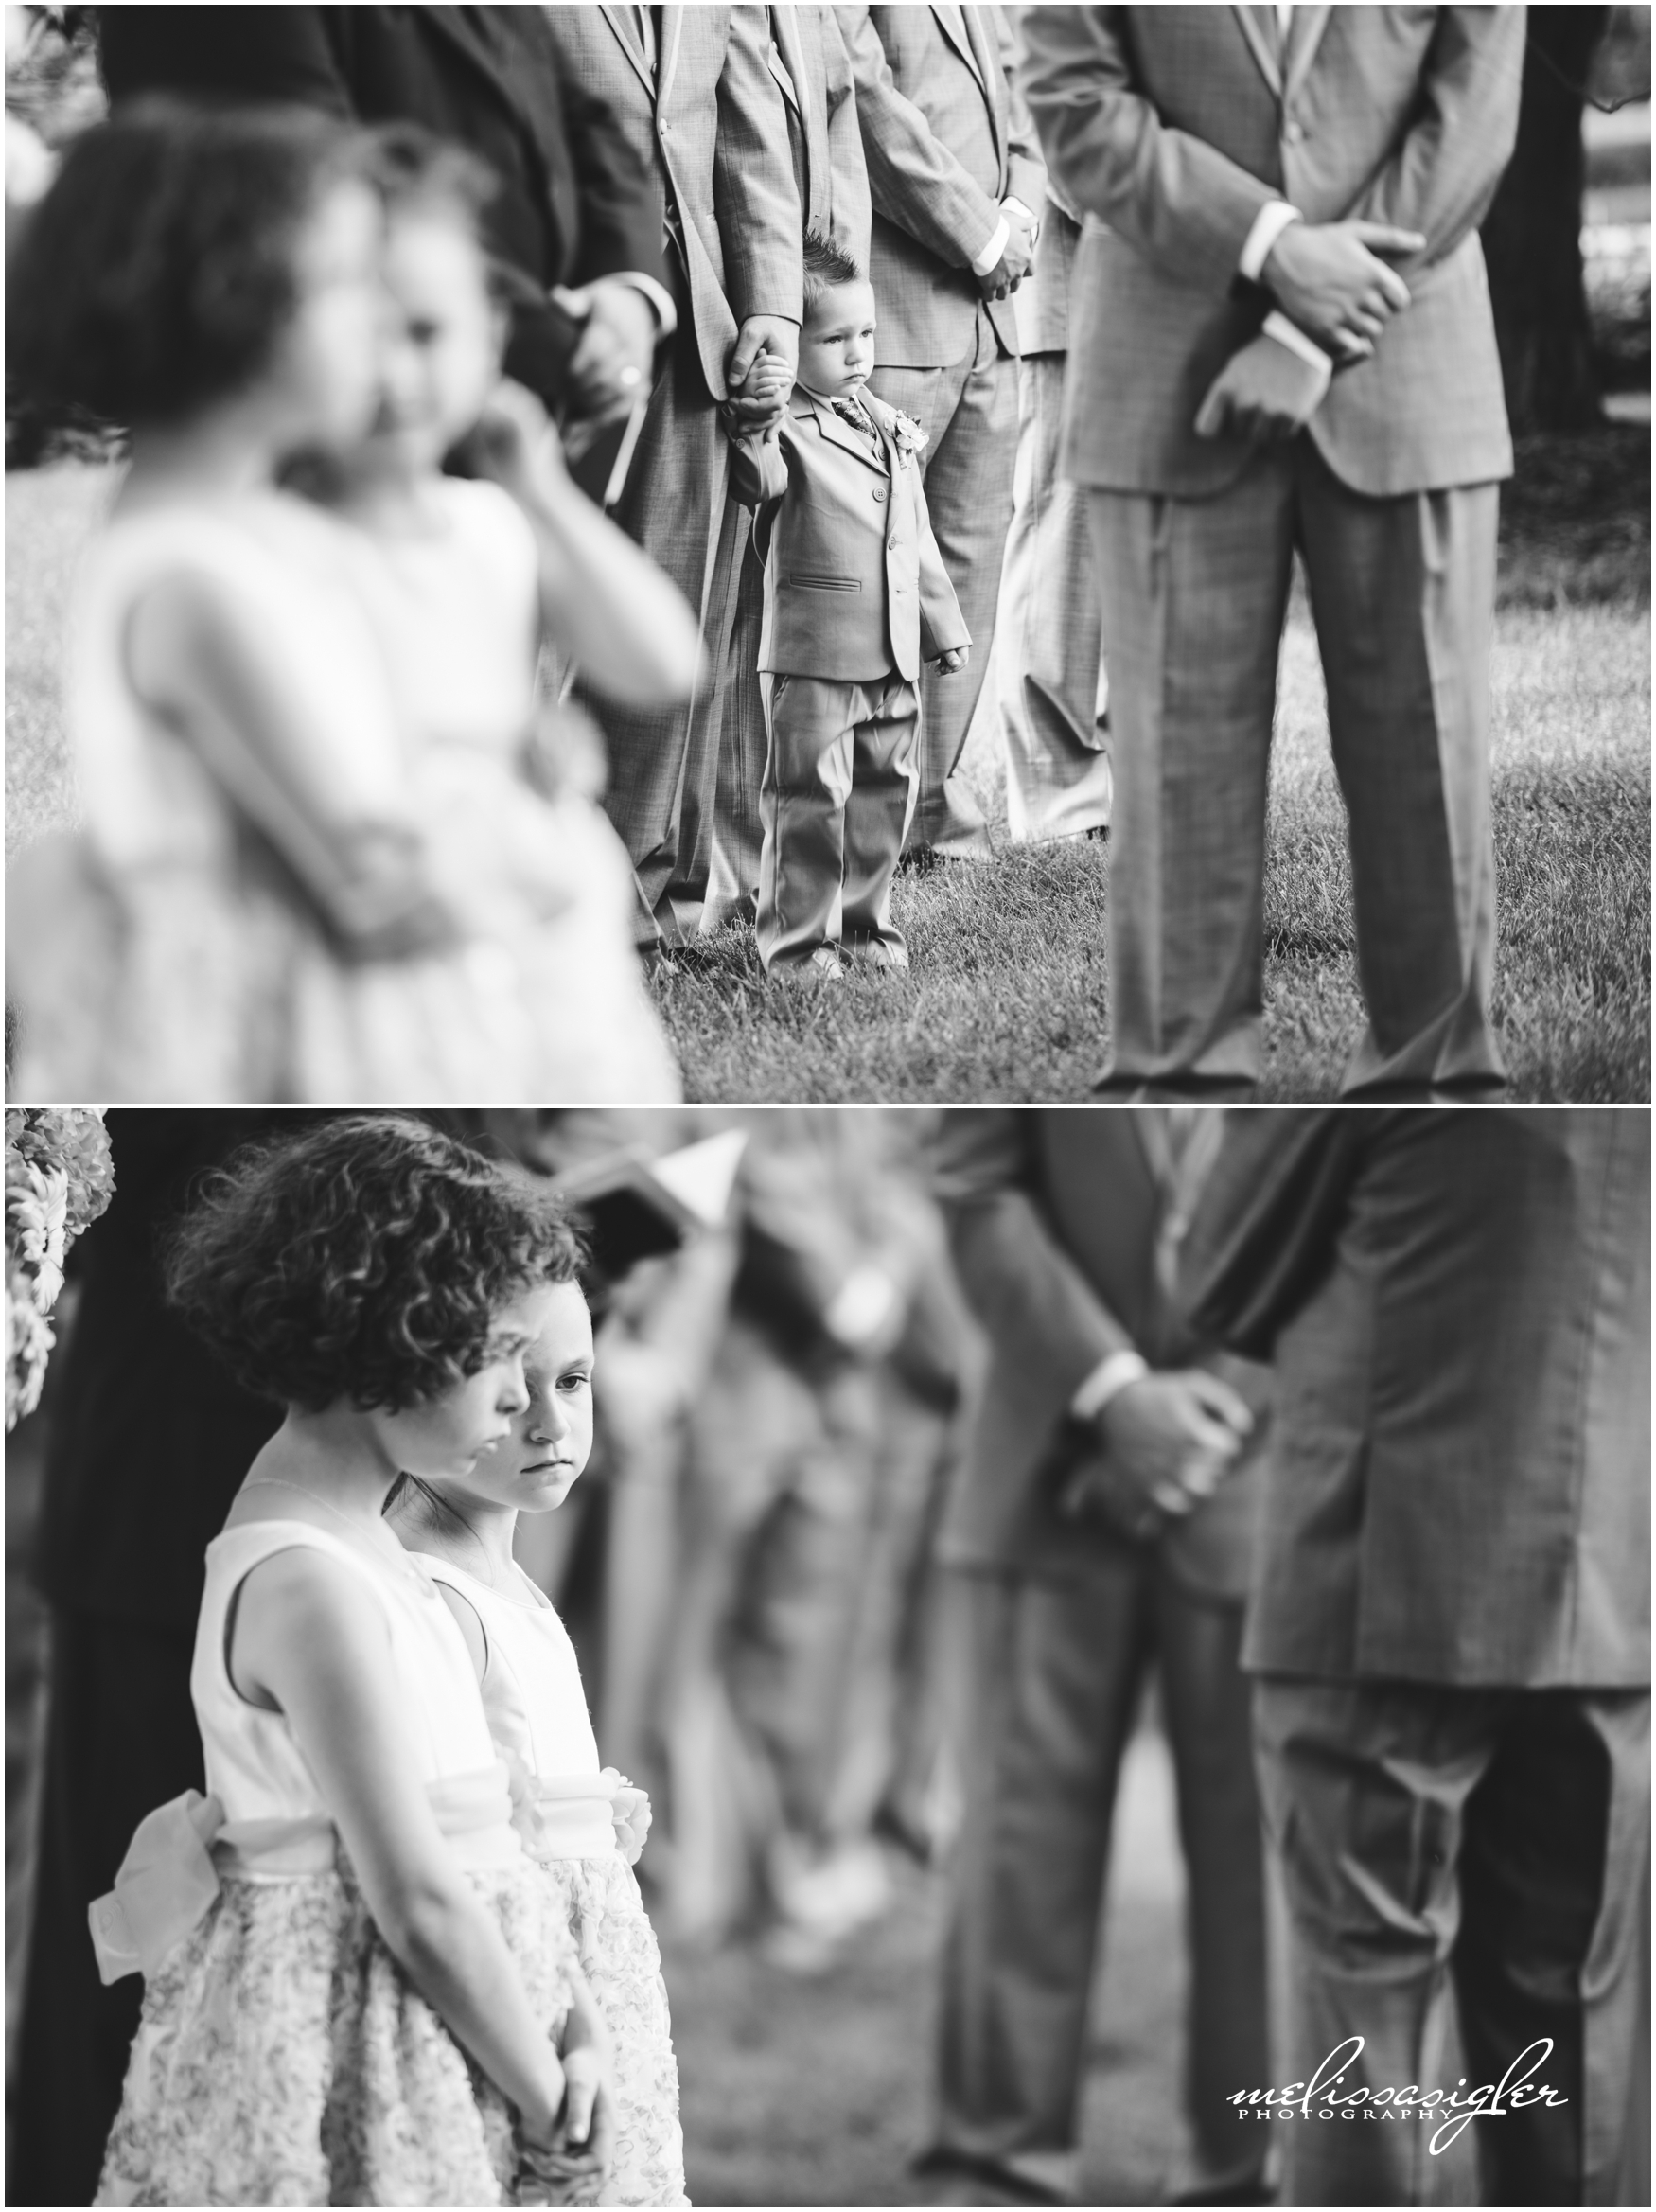 Flower girl and ring bearer by wedding photojournalist  Melissa Sigler